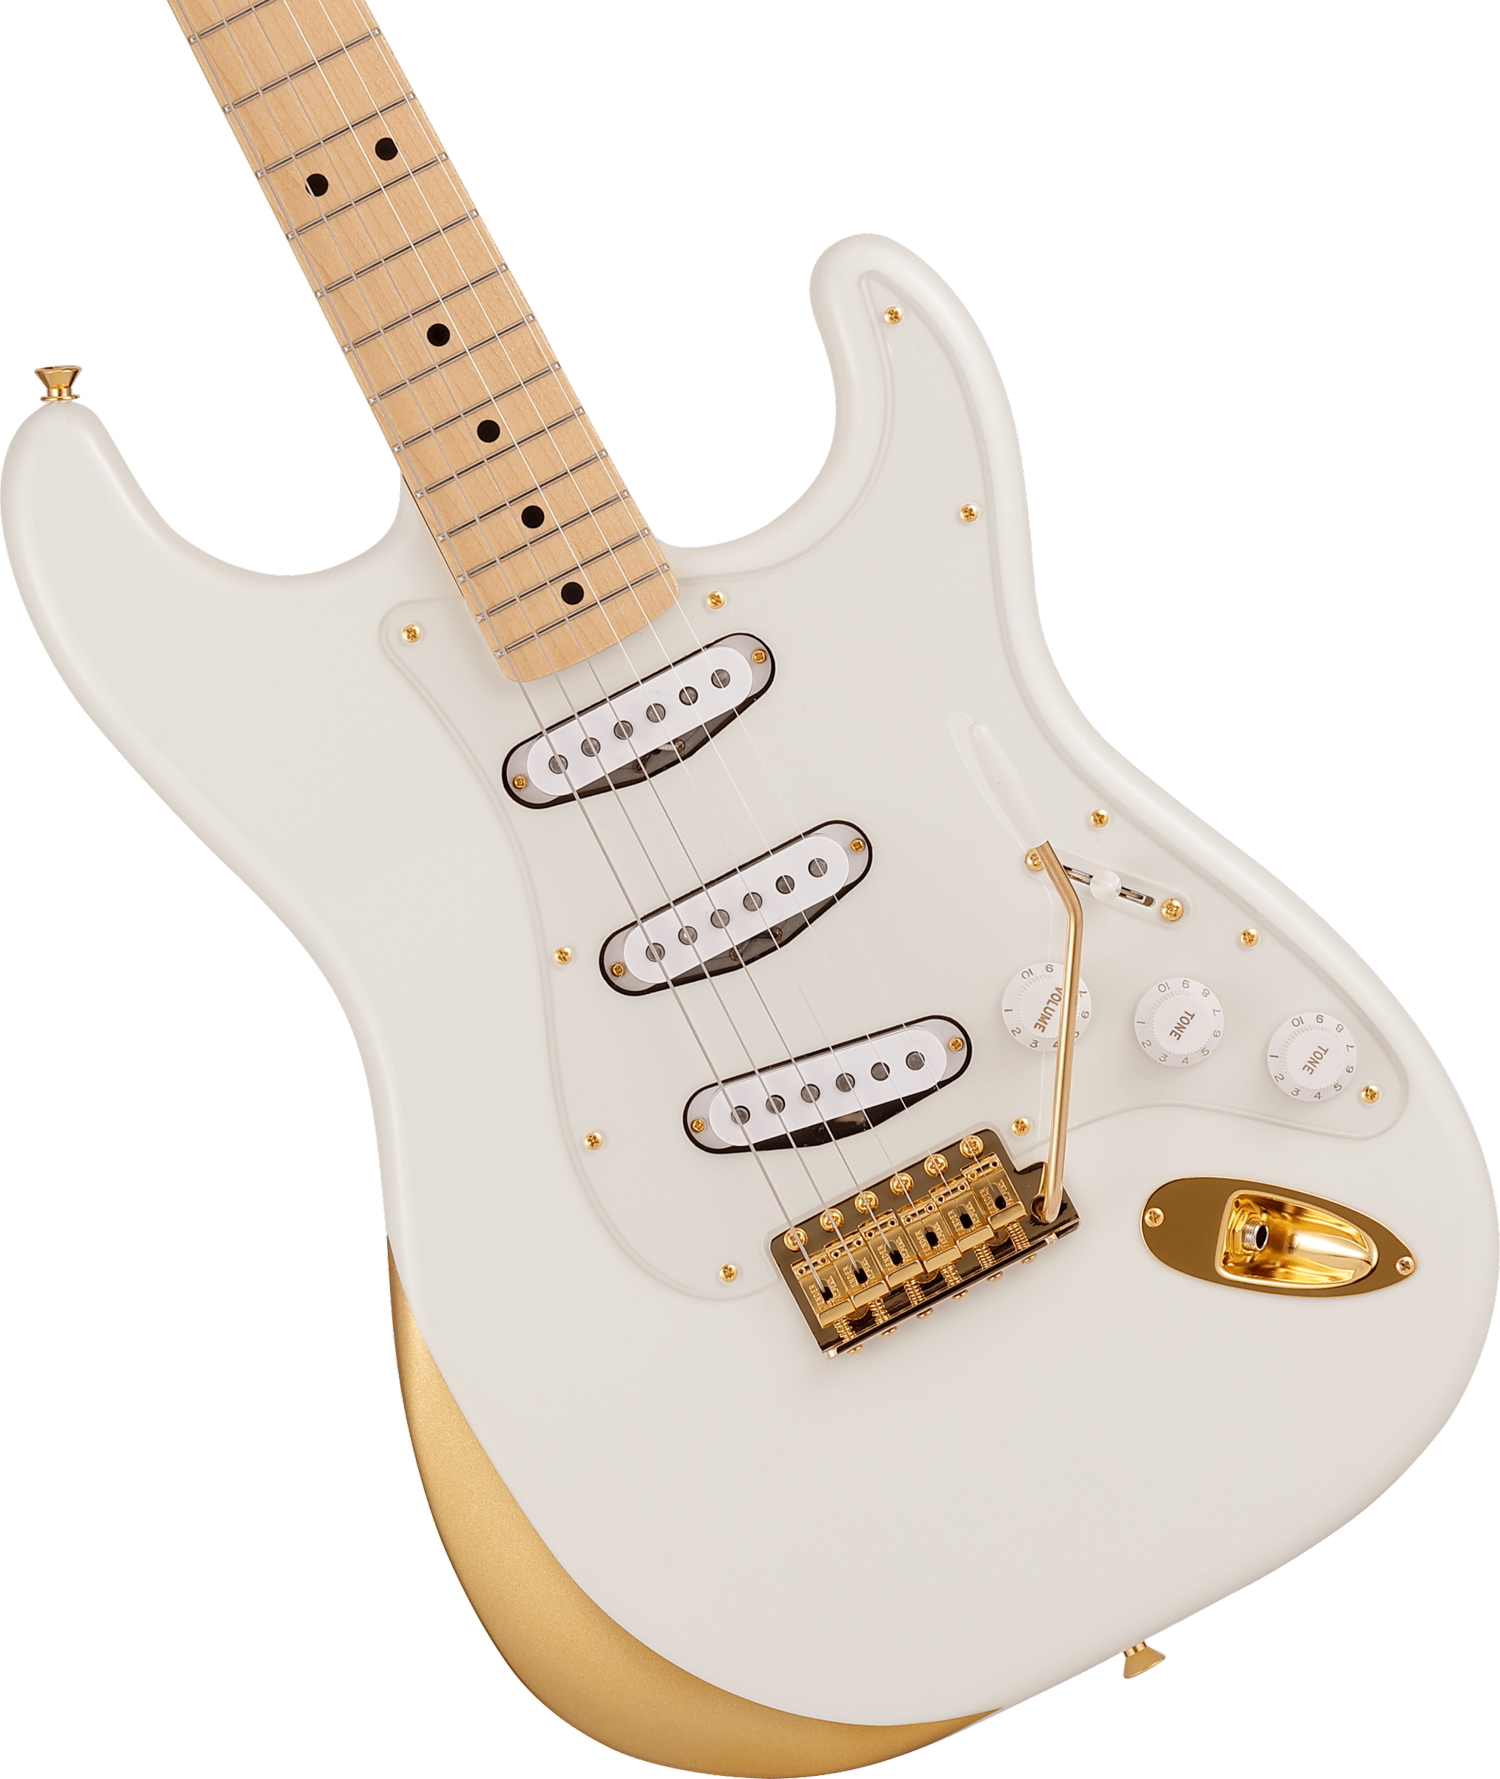 Ken Stratocaster® Experiment #1, Maple Fingerboard, Original White追加画像